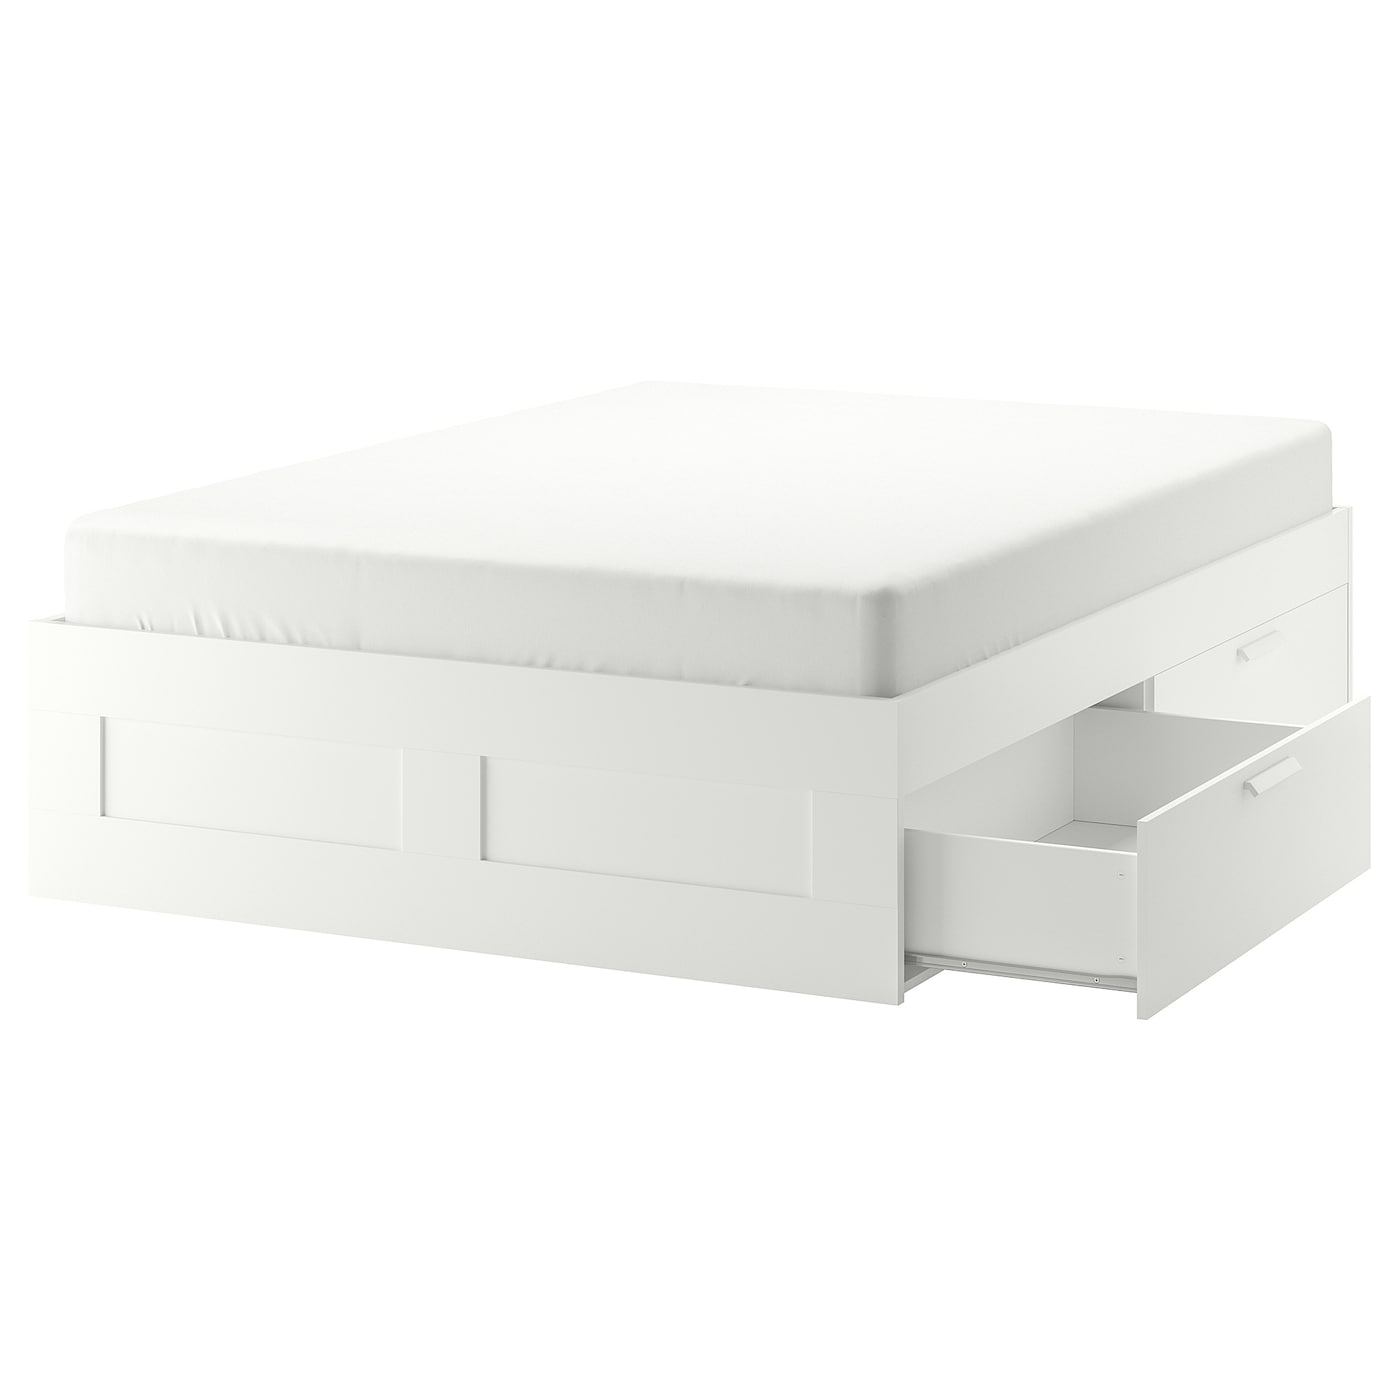 Каркас кровати с ящиками - IKEA BRIMNES, 200х180 см, белый, БРИМНЕС ИКЕА